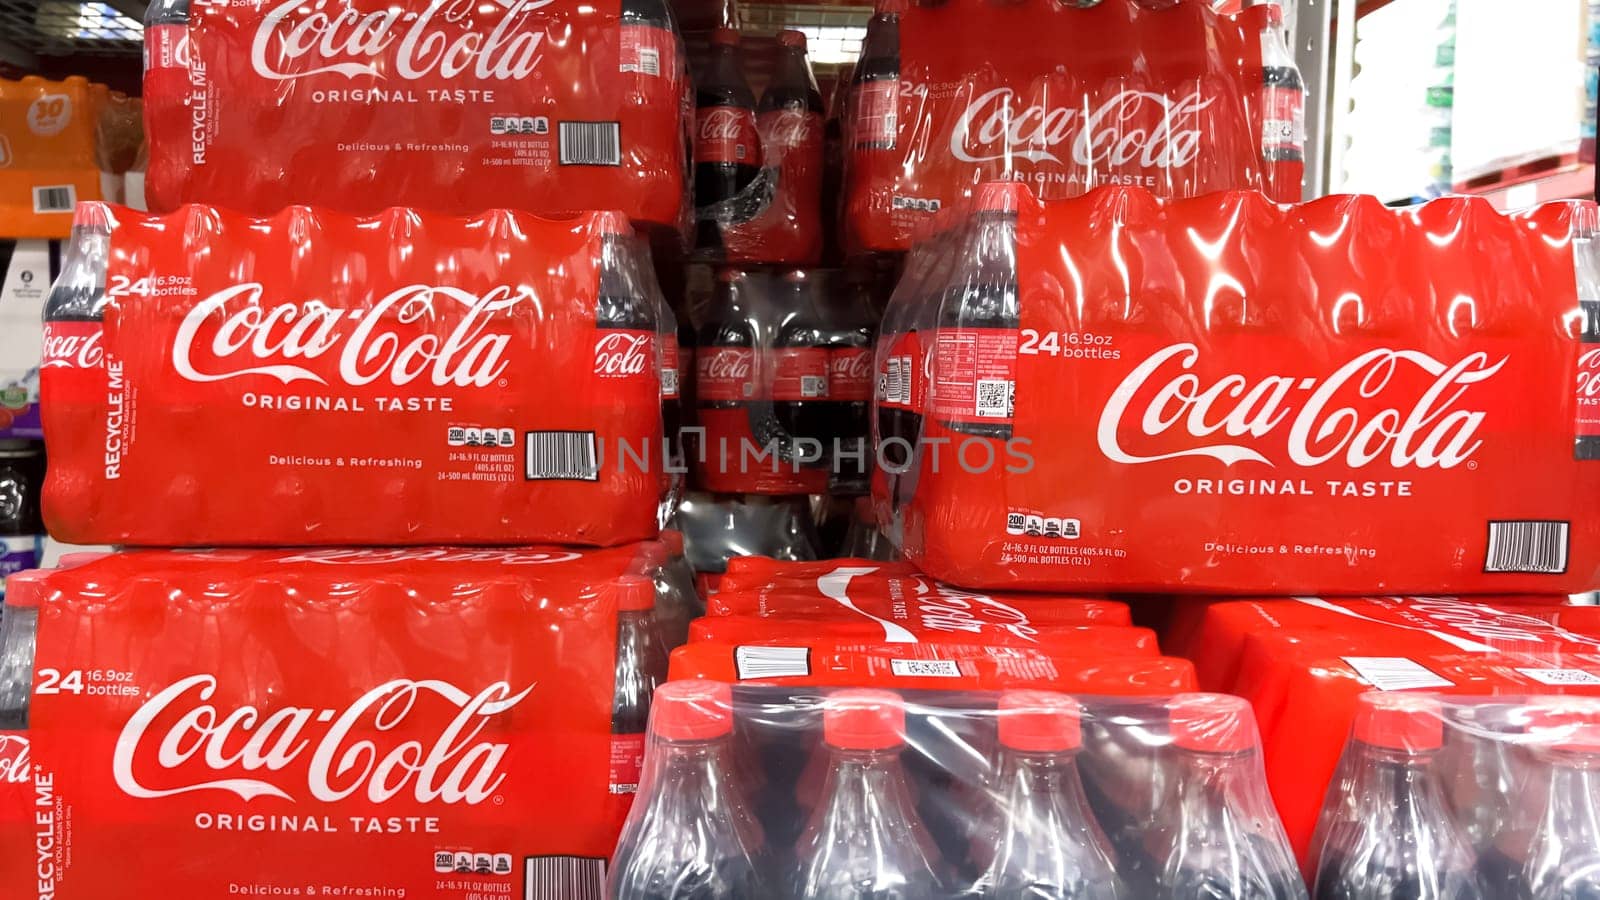 Denver, Colorado, USA-February 28, 2024-At Sam’s Club, the shelves are stocked with bulk multipacks of Coca-Cola Original Taste, their iconic red branding a familiar sight, ready for members to enjoy the classic flavor.